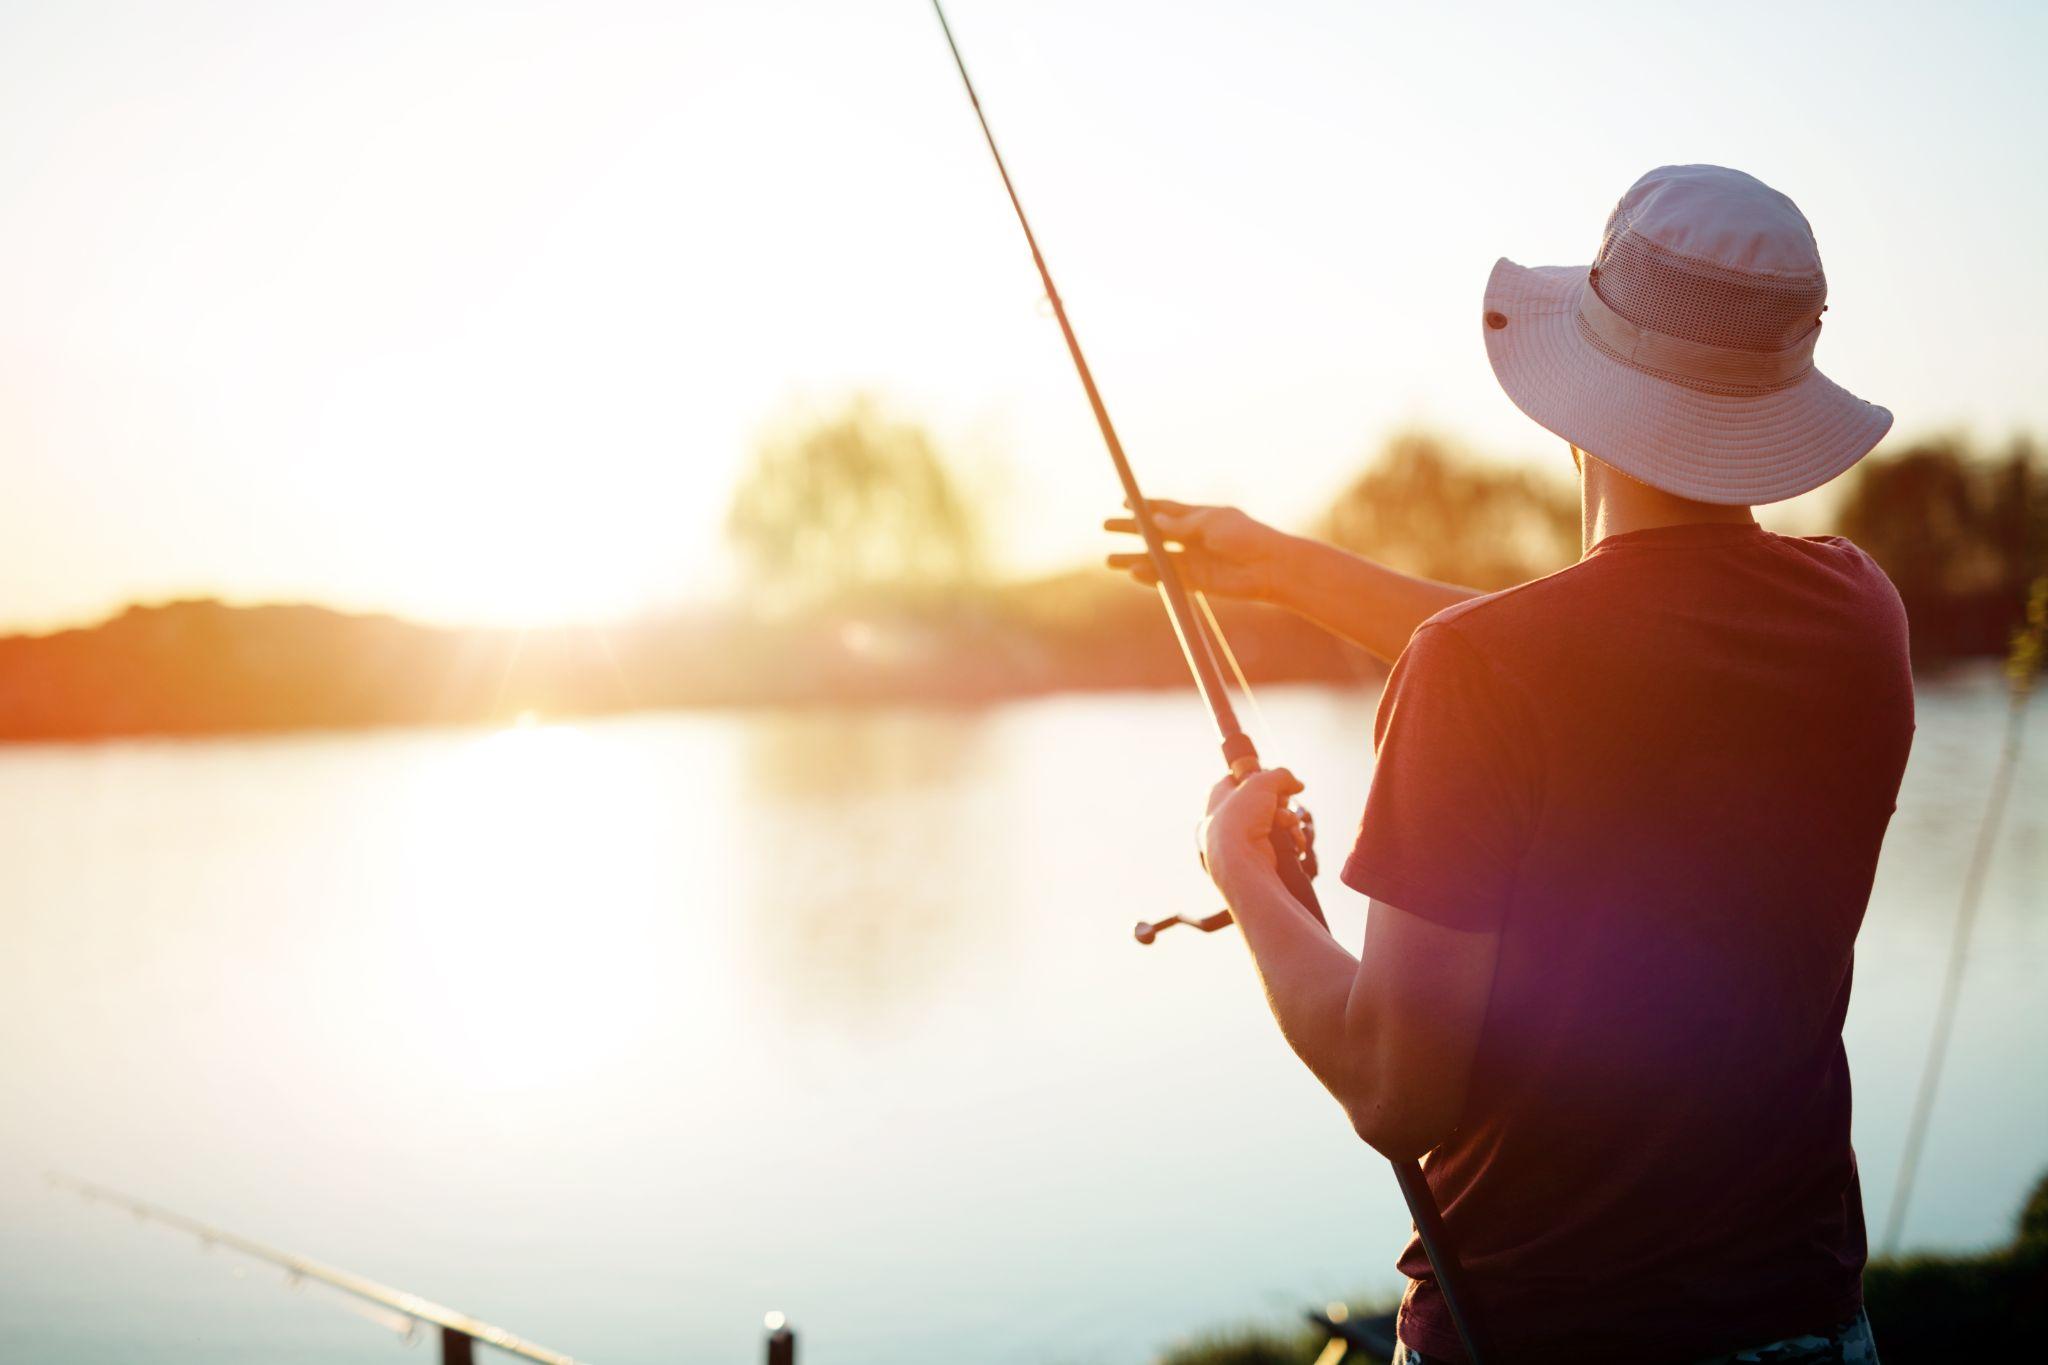 Young man fishing on a lake at sunset and enjoying hobby